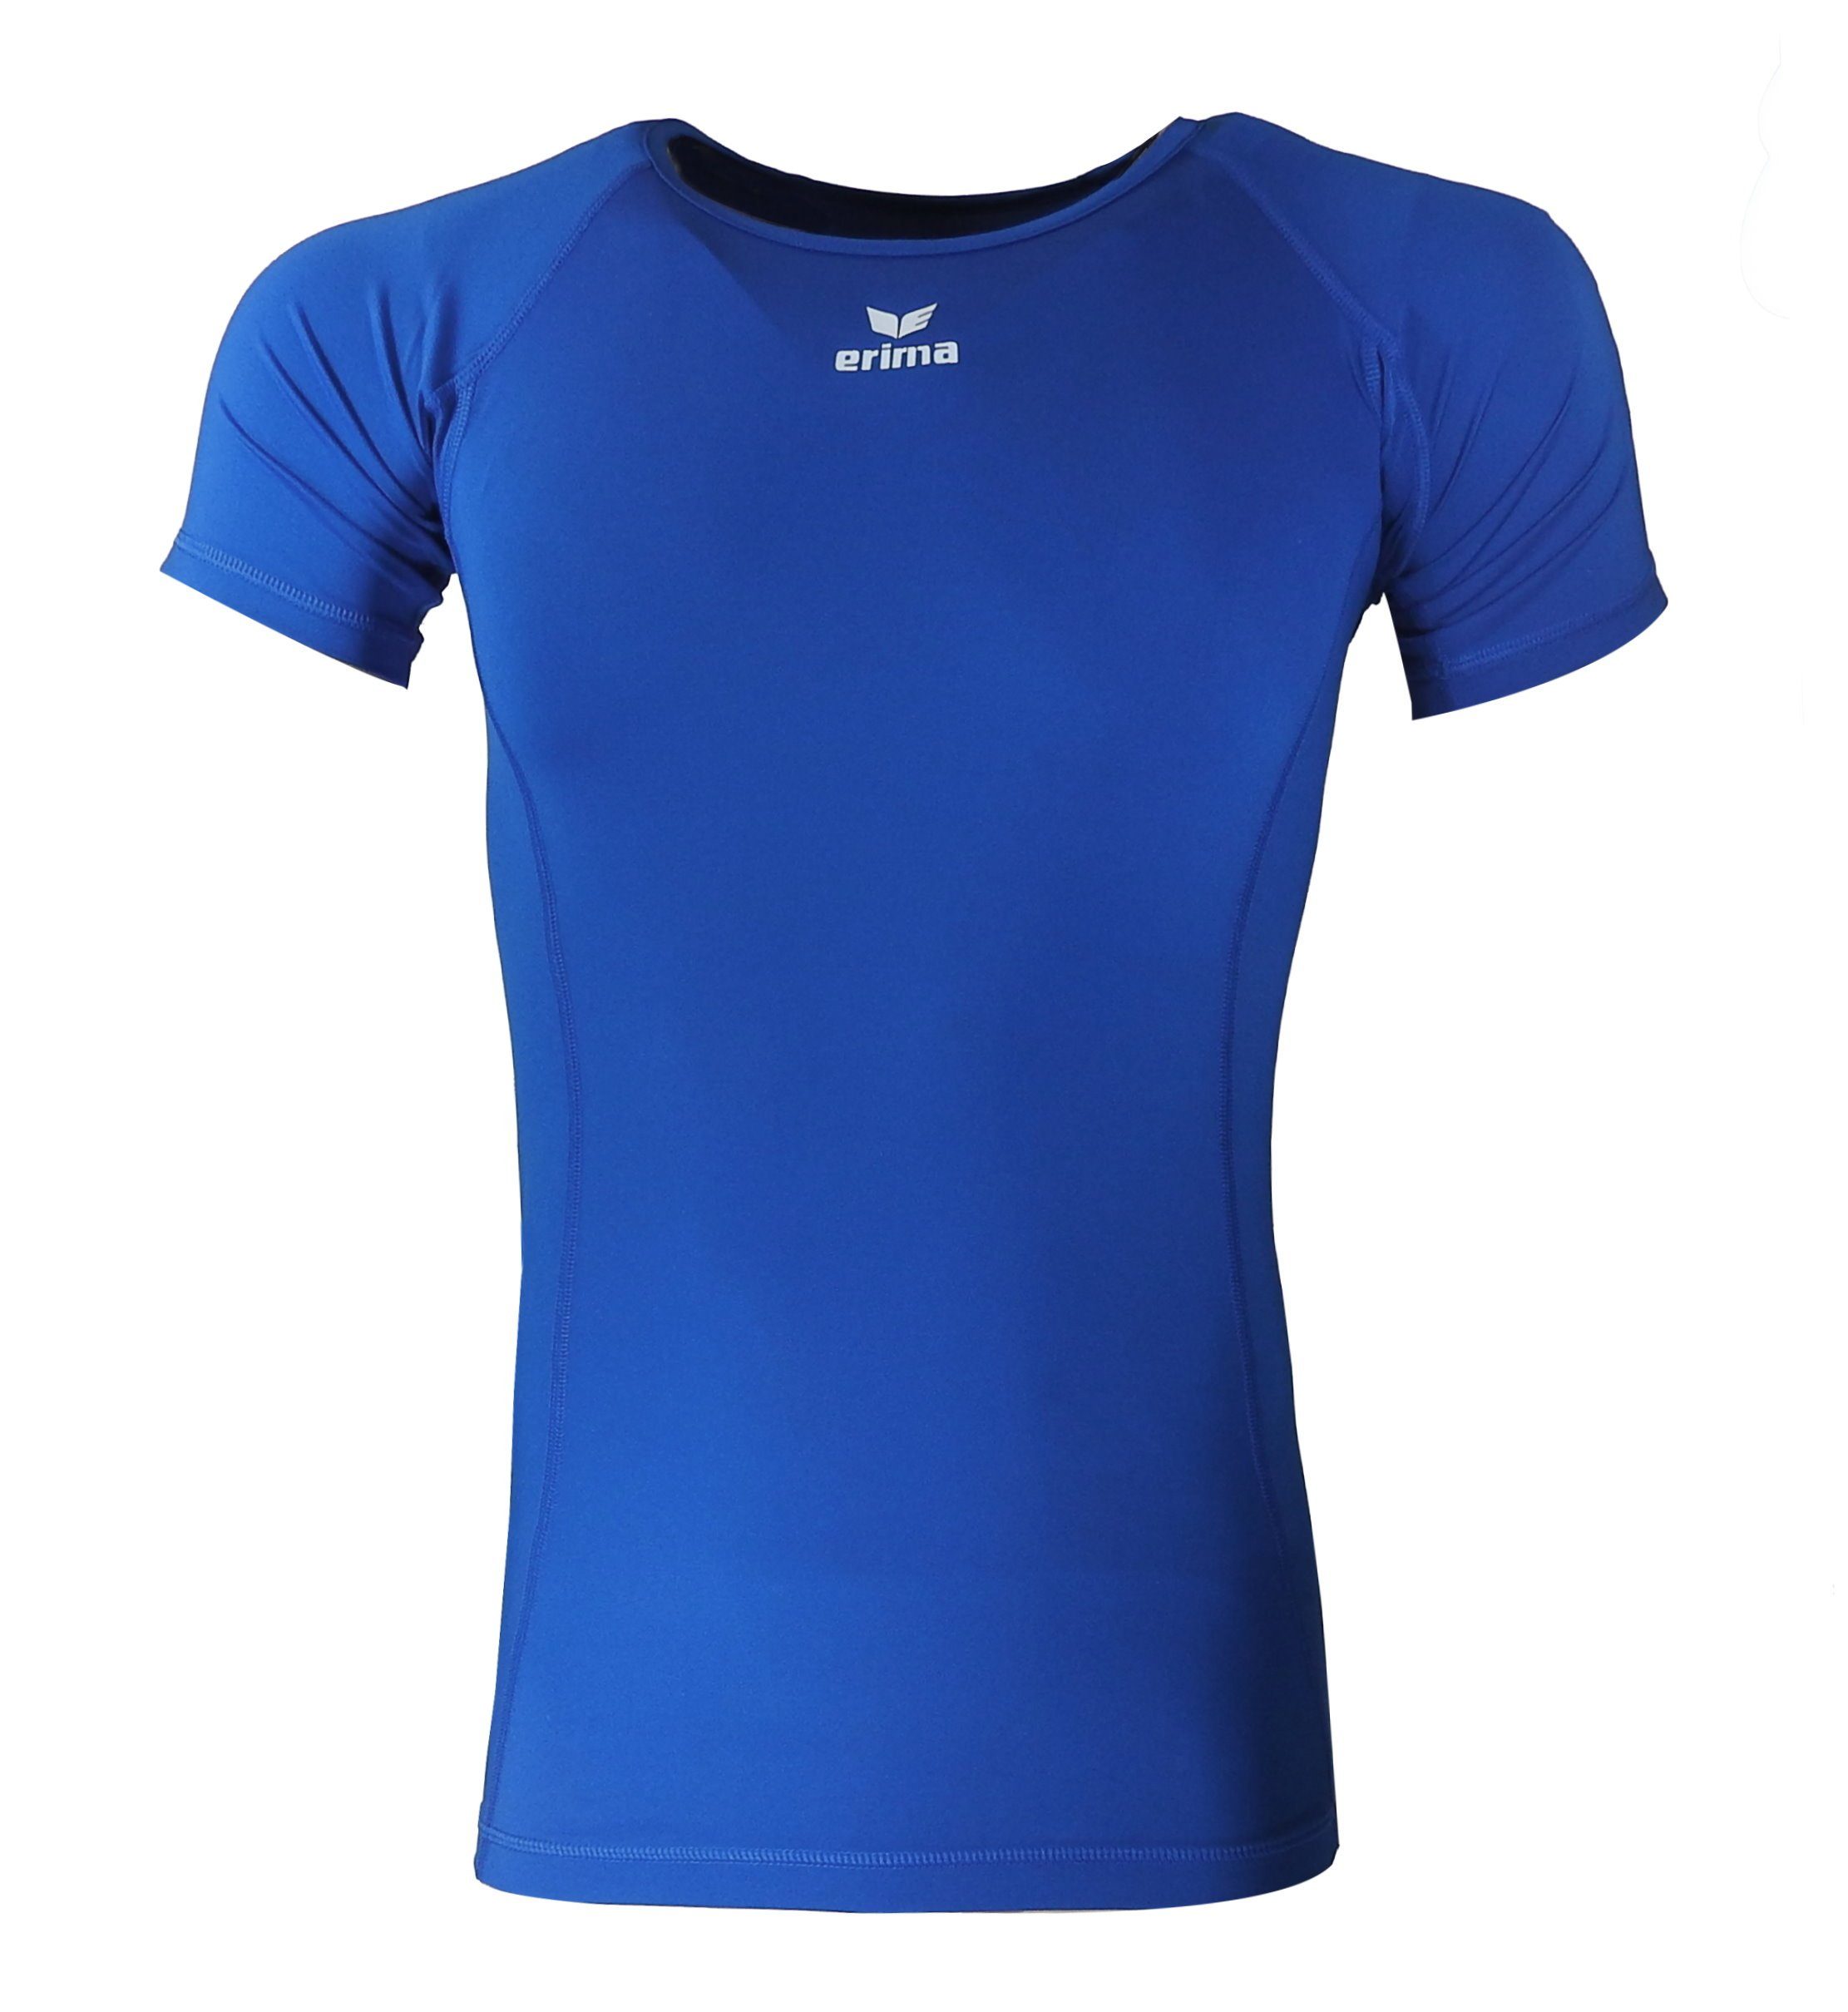 Erima Laufen Sport Laufshirt Unisex Funktionsshirt T-Shirt Training Sportshirt Support Fussball Blau Shirt